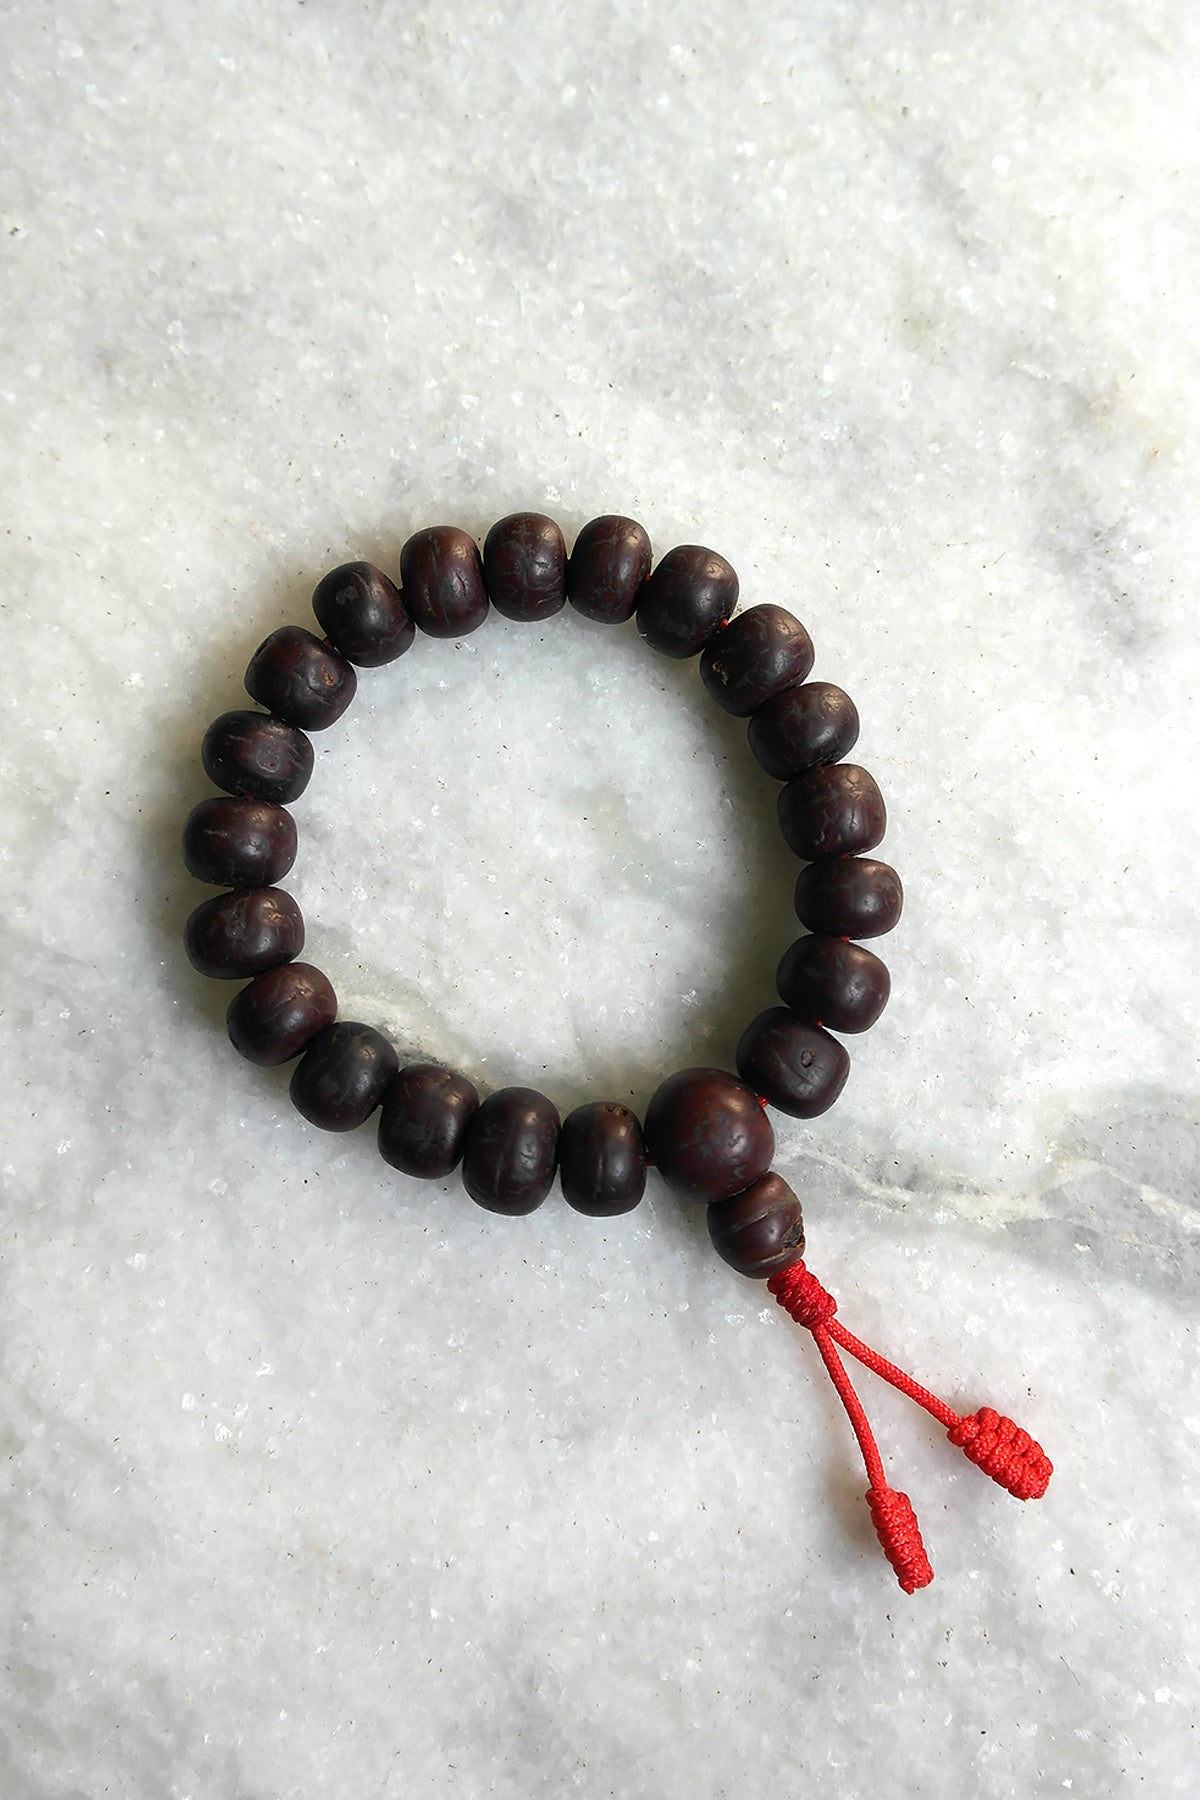 Dark Bodhi Seed Wrist Mala, 9mm - Your Journey to Mindful Fulfillment